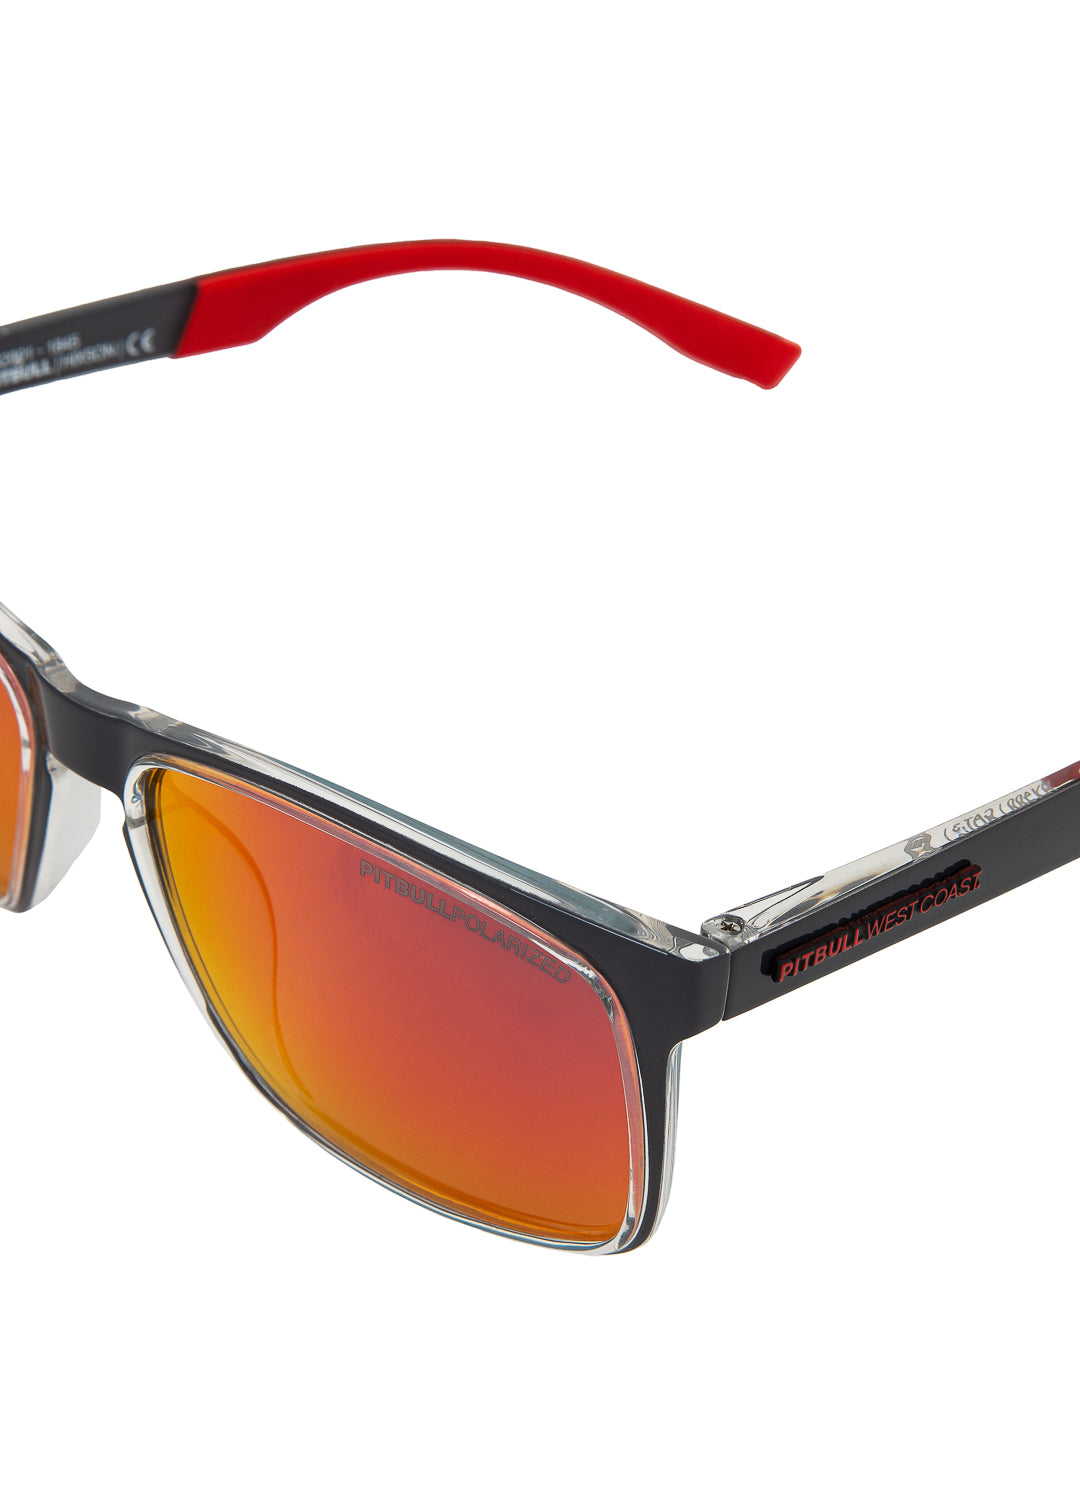 Sunglasses Grey/Red HIXSON.